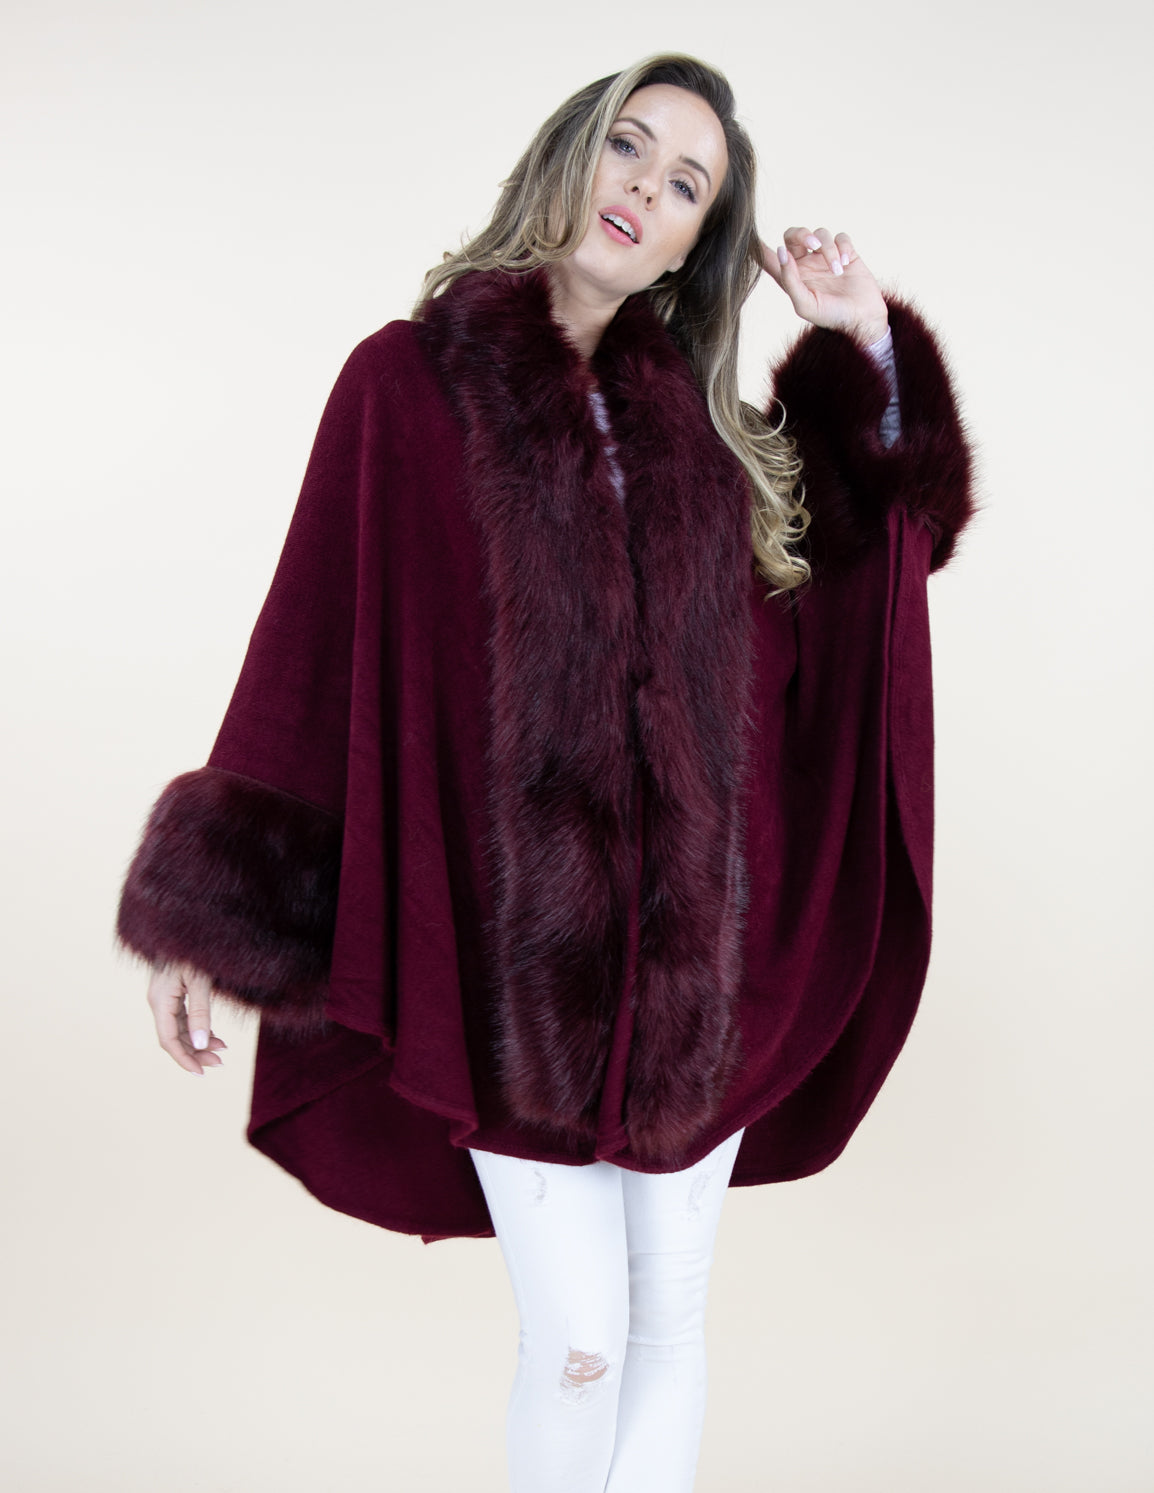 Burgundy Faux Fur Trimmed Coat   SALE 40% OFF - NOW $49.47